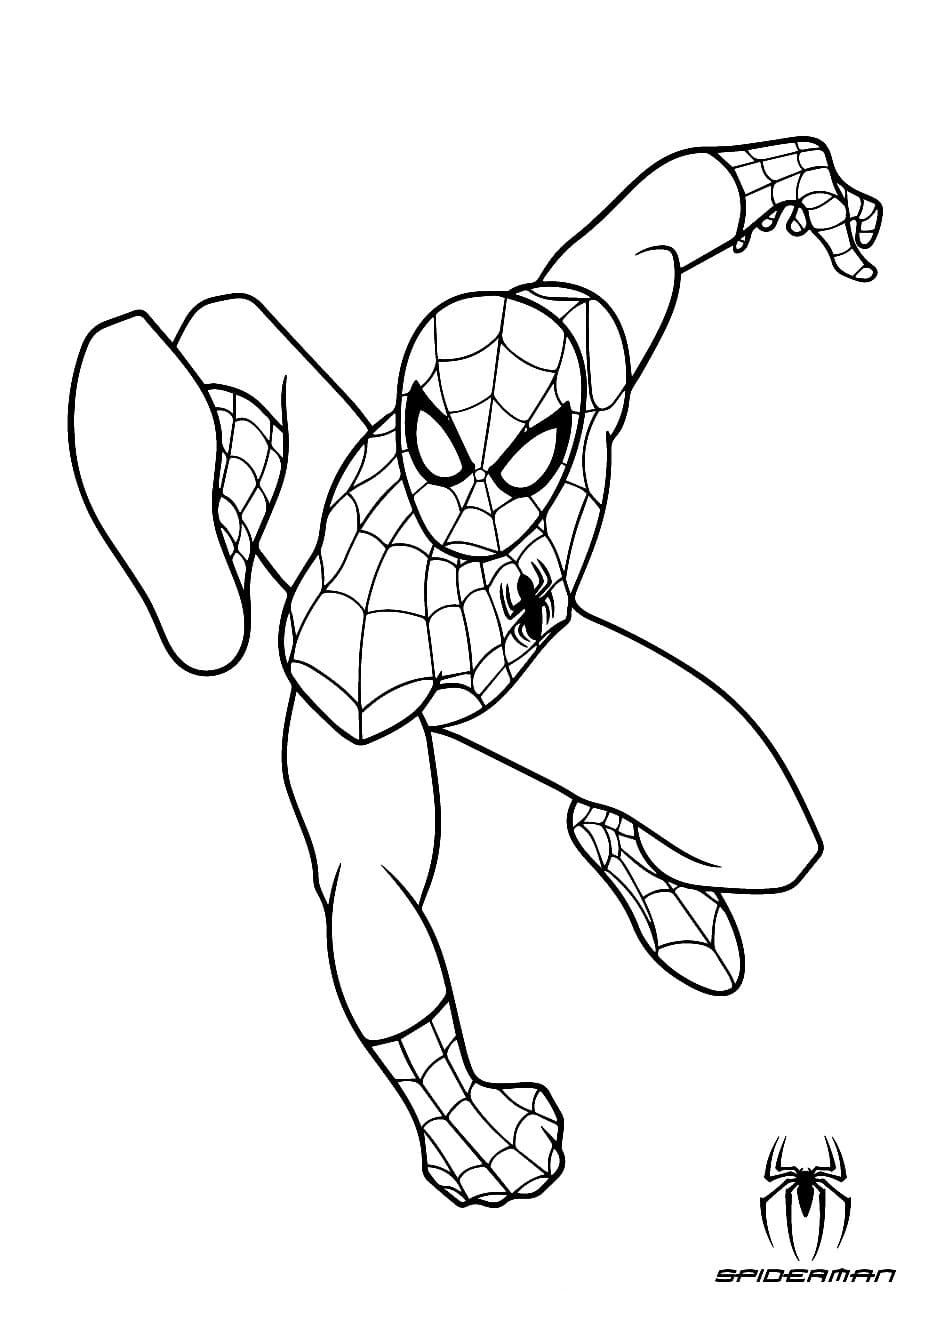 Spider Man Coloring Pages – Print for free.   Razukraski.com